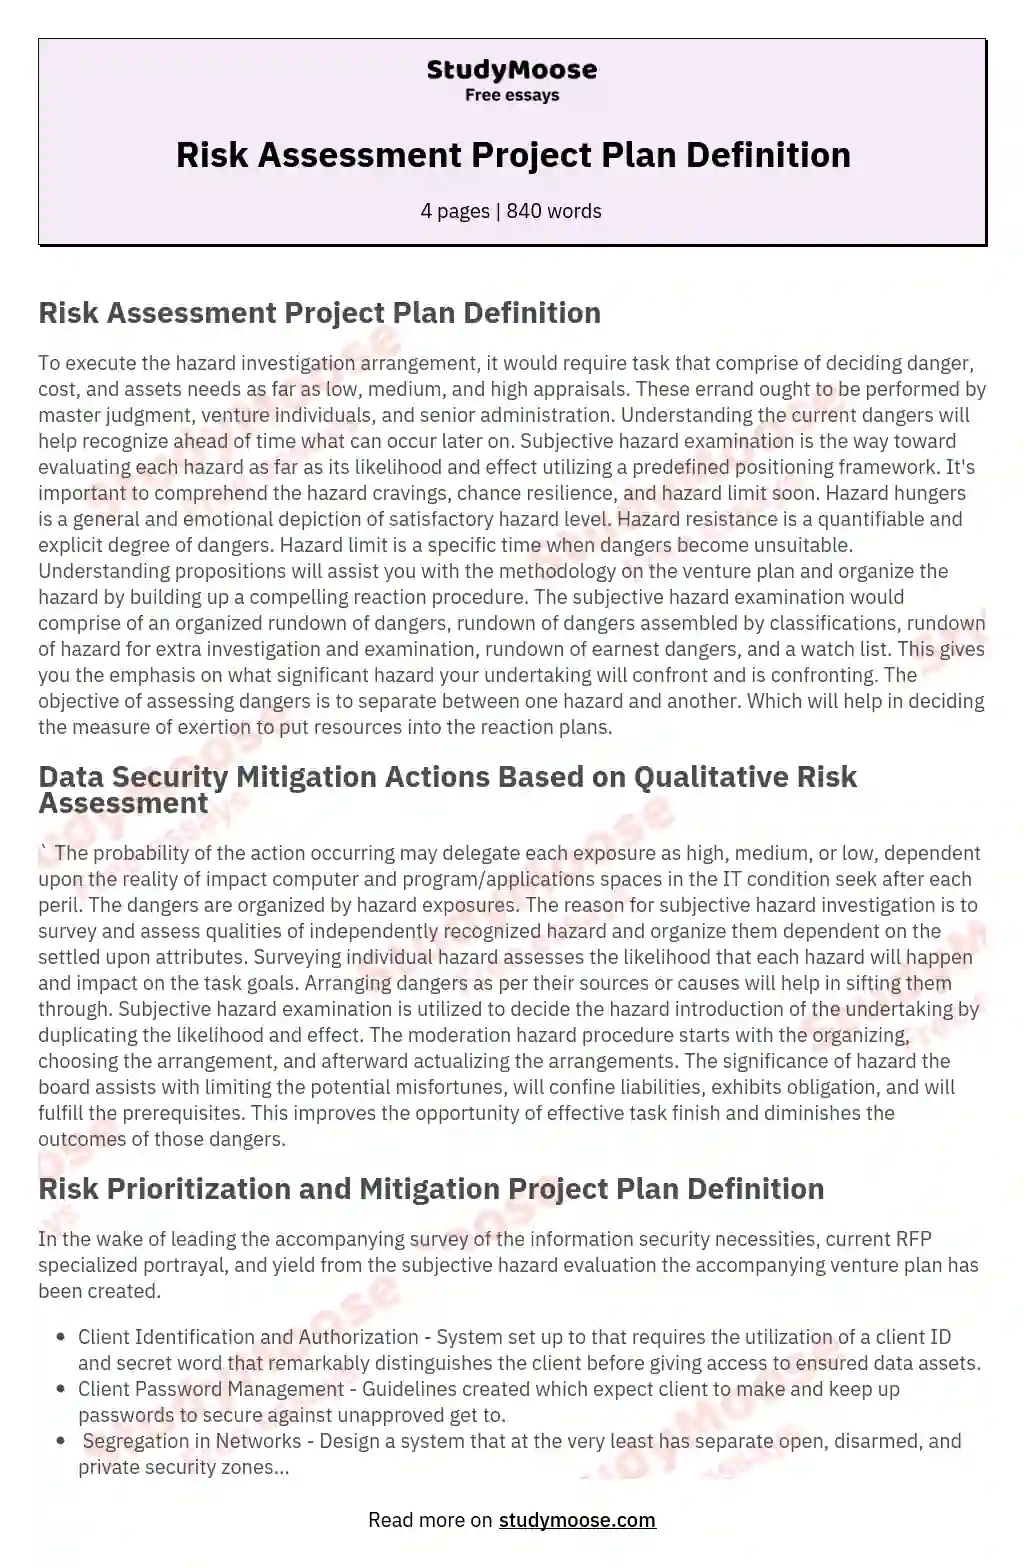 Risk Assessment Project Plan Definition essay